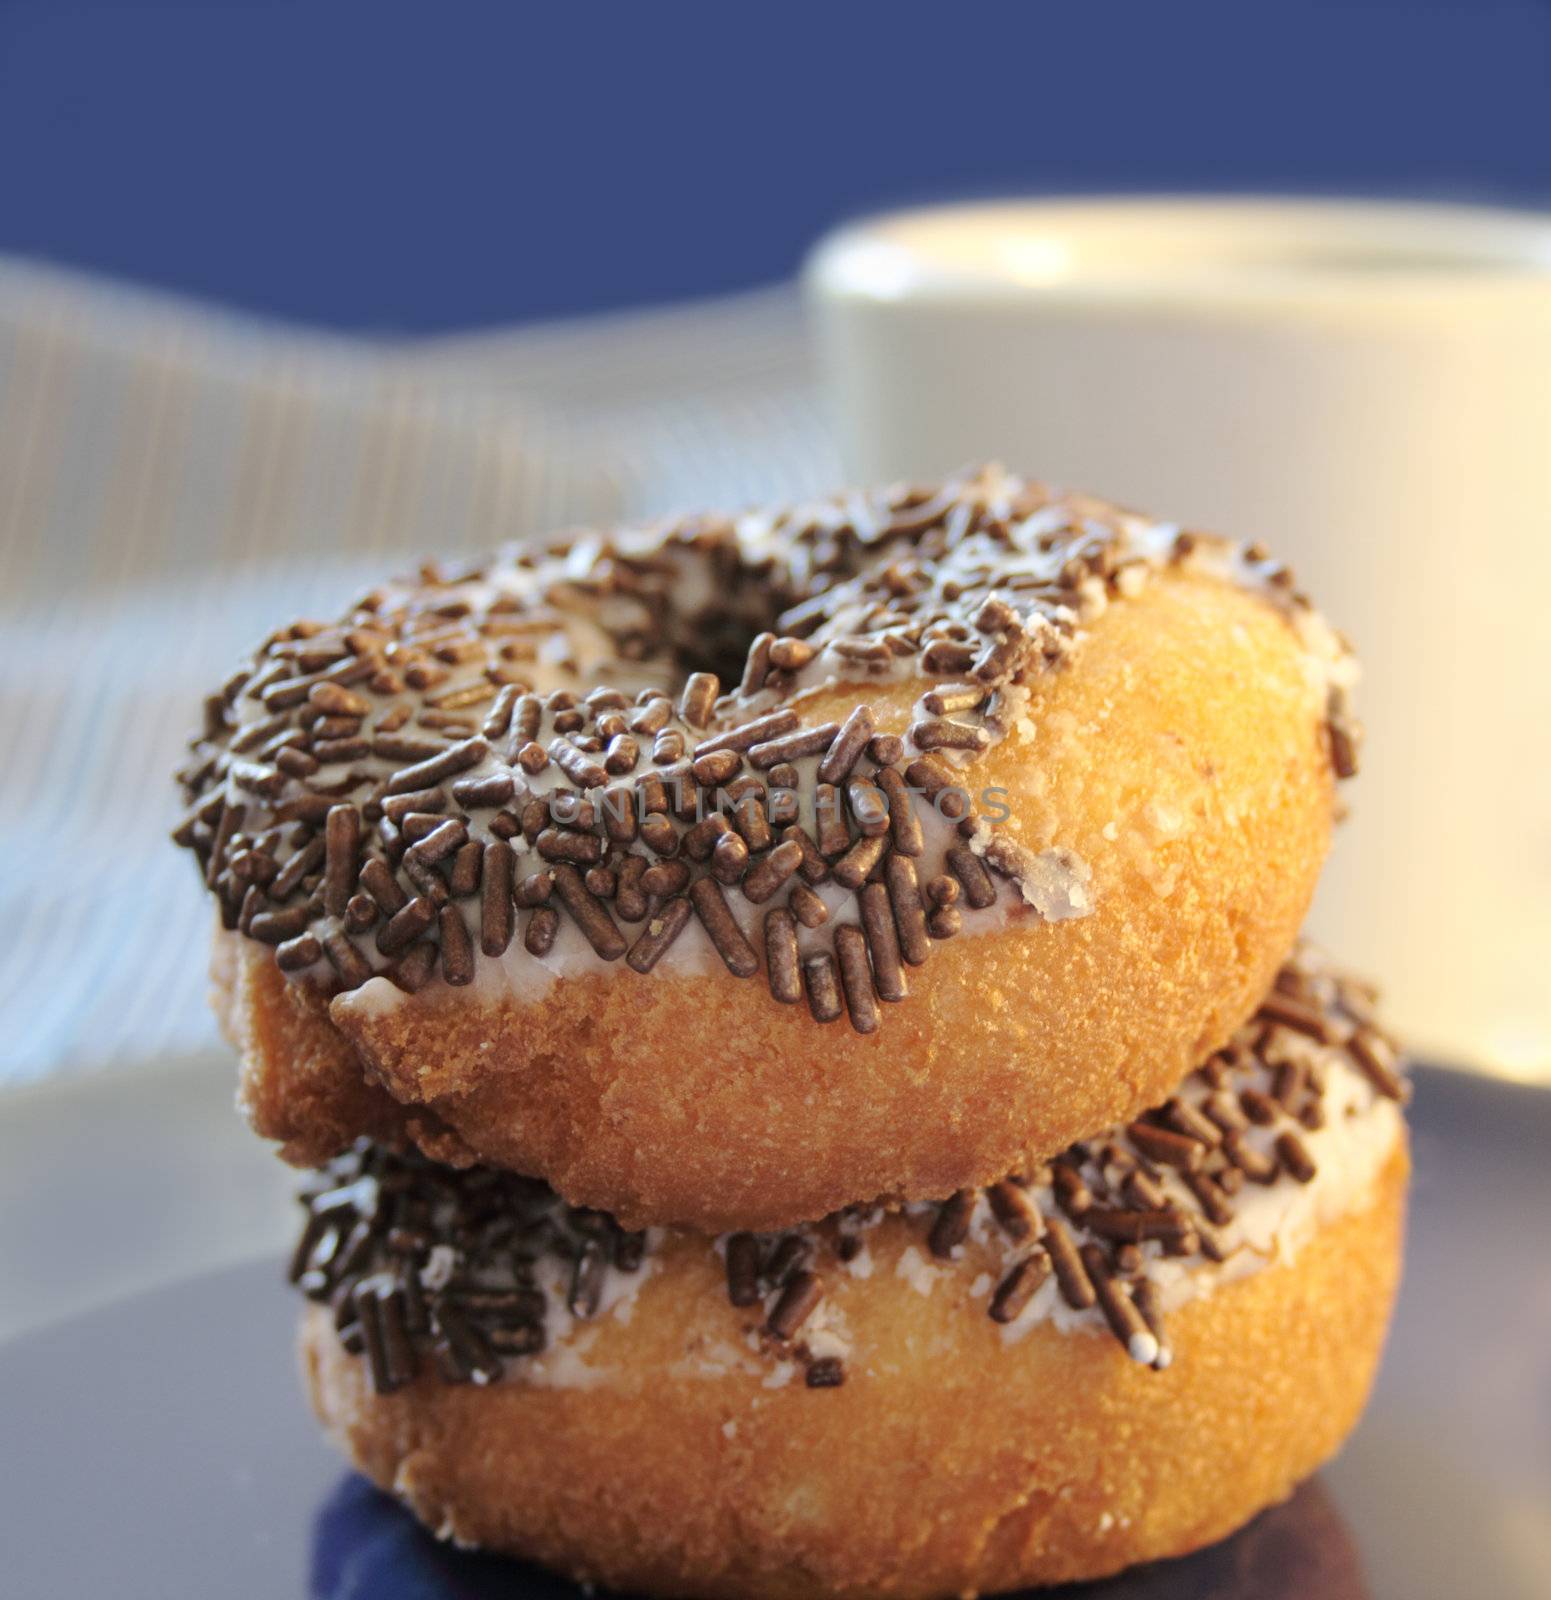 doughnuts with chocolate sprinkles by nebari